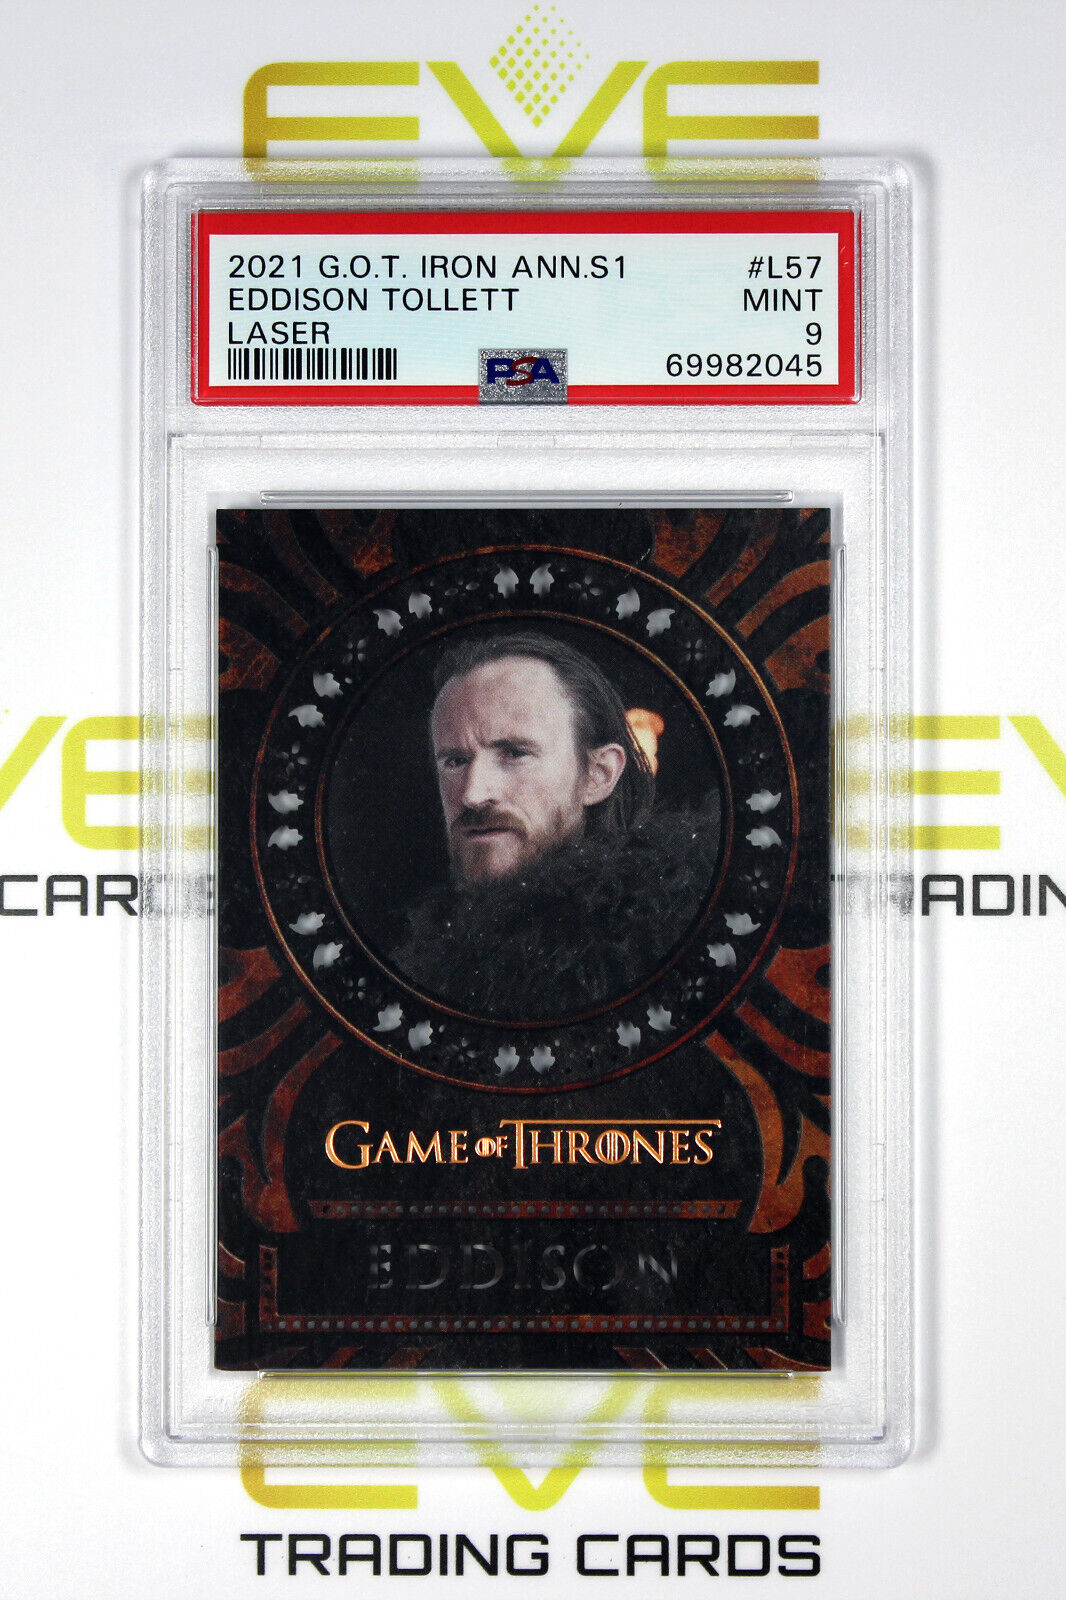 Graded Game of Thrones Card - #L57 2021 Eddison Tollett - Laser - PSA 9